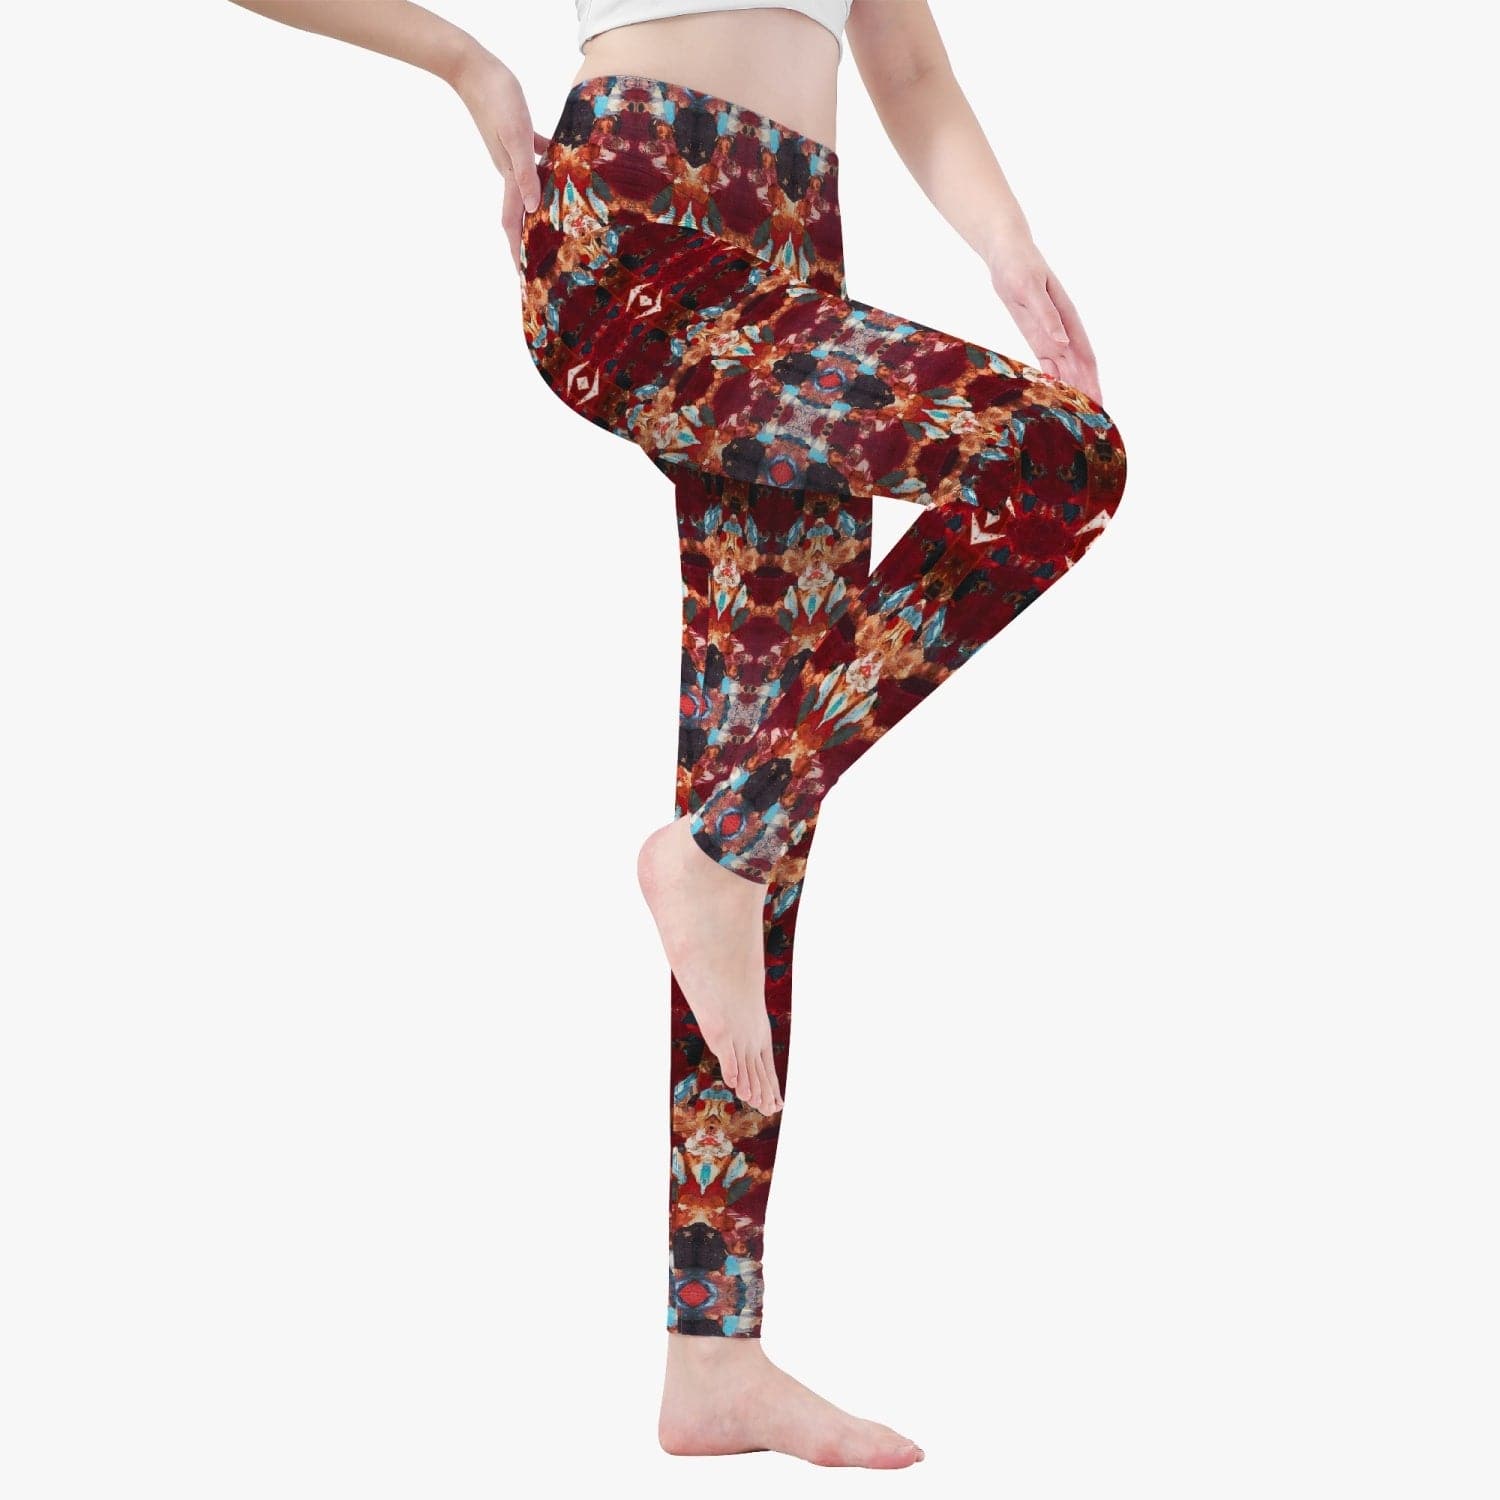 Gratitude Meditative Inspirations Yoga Pants/ Leggings for Women, by Sensus Studio Design